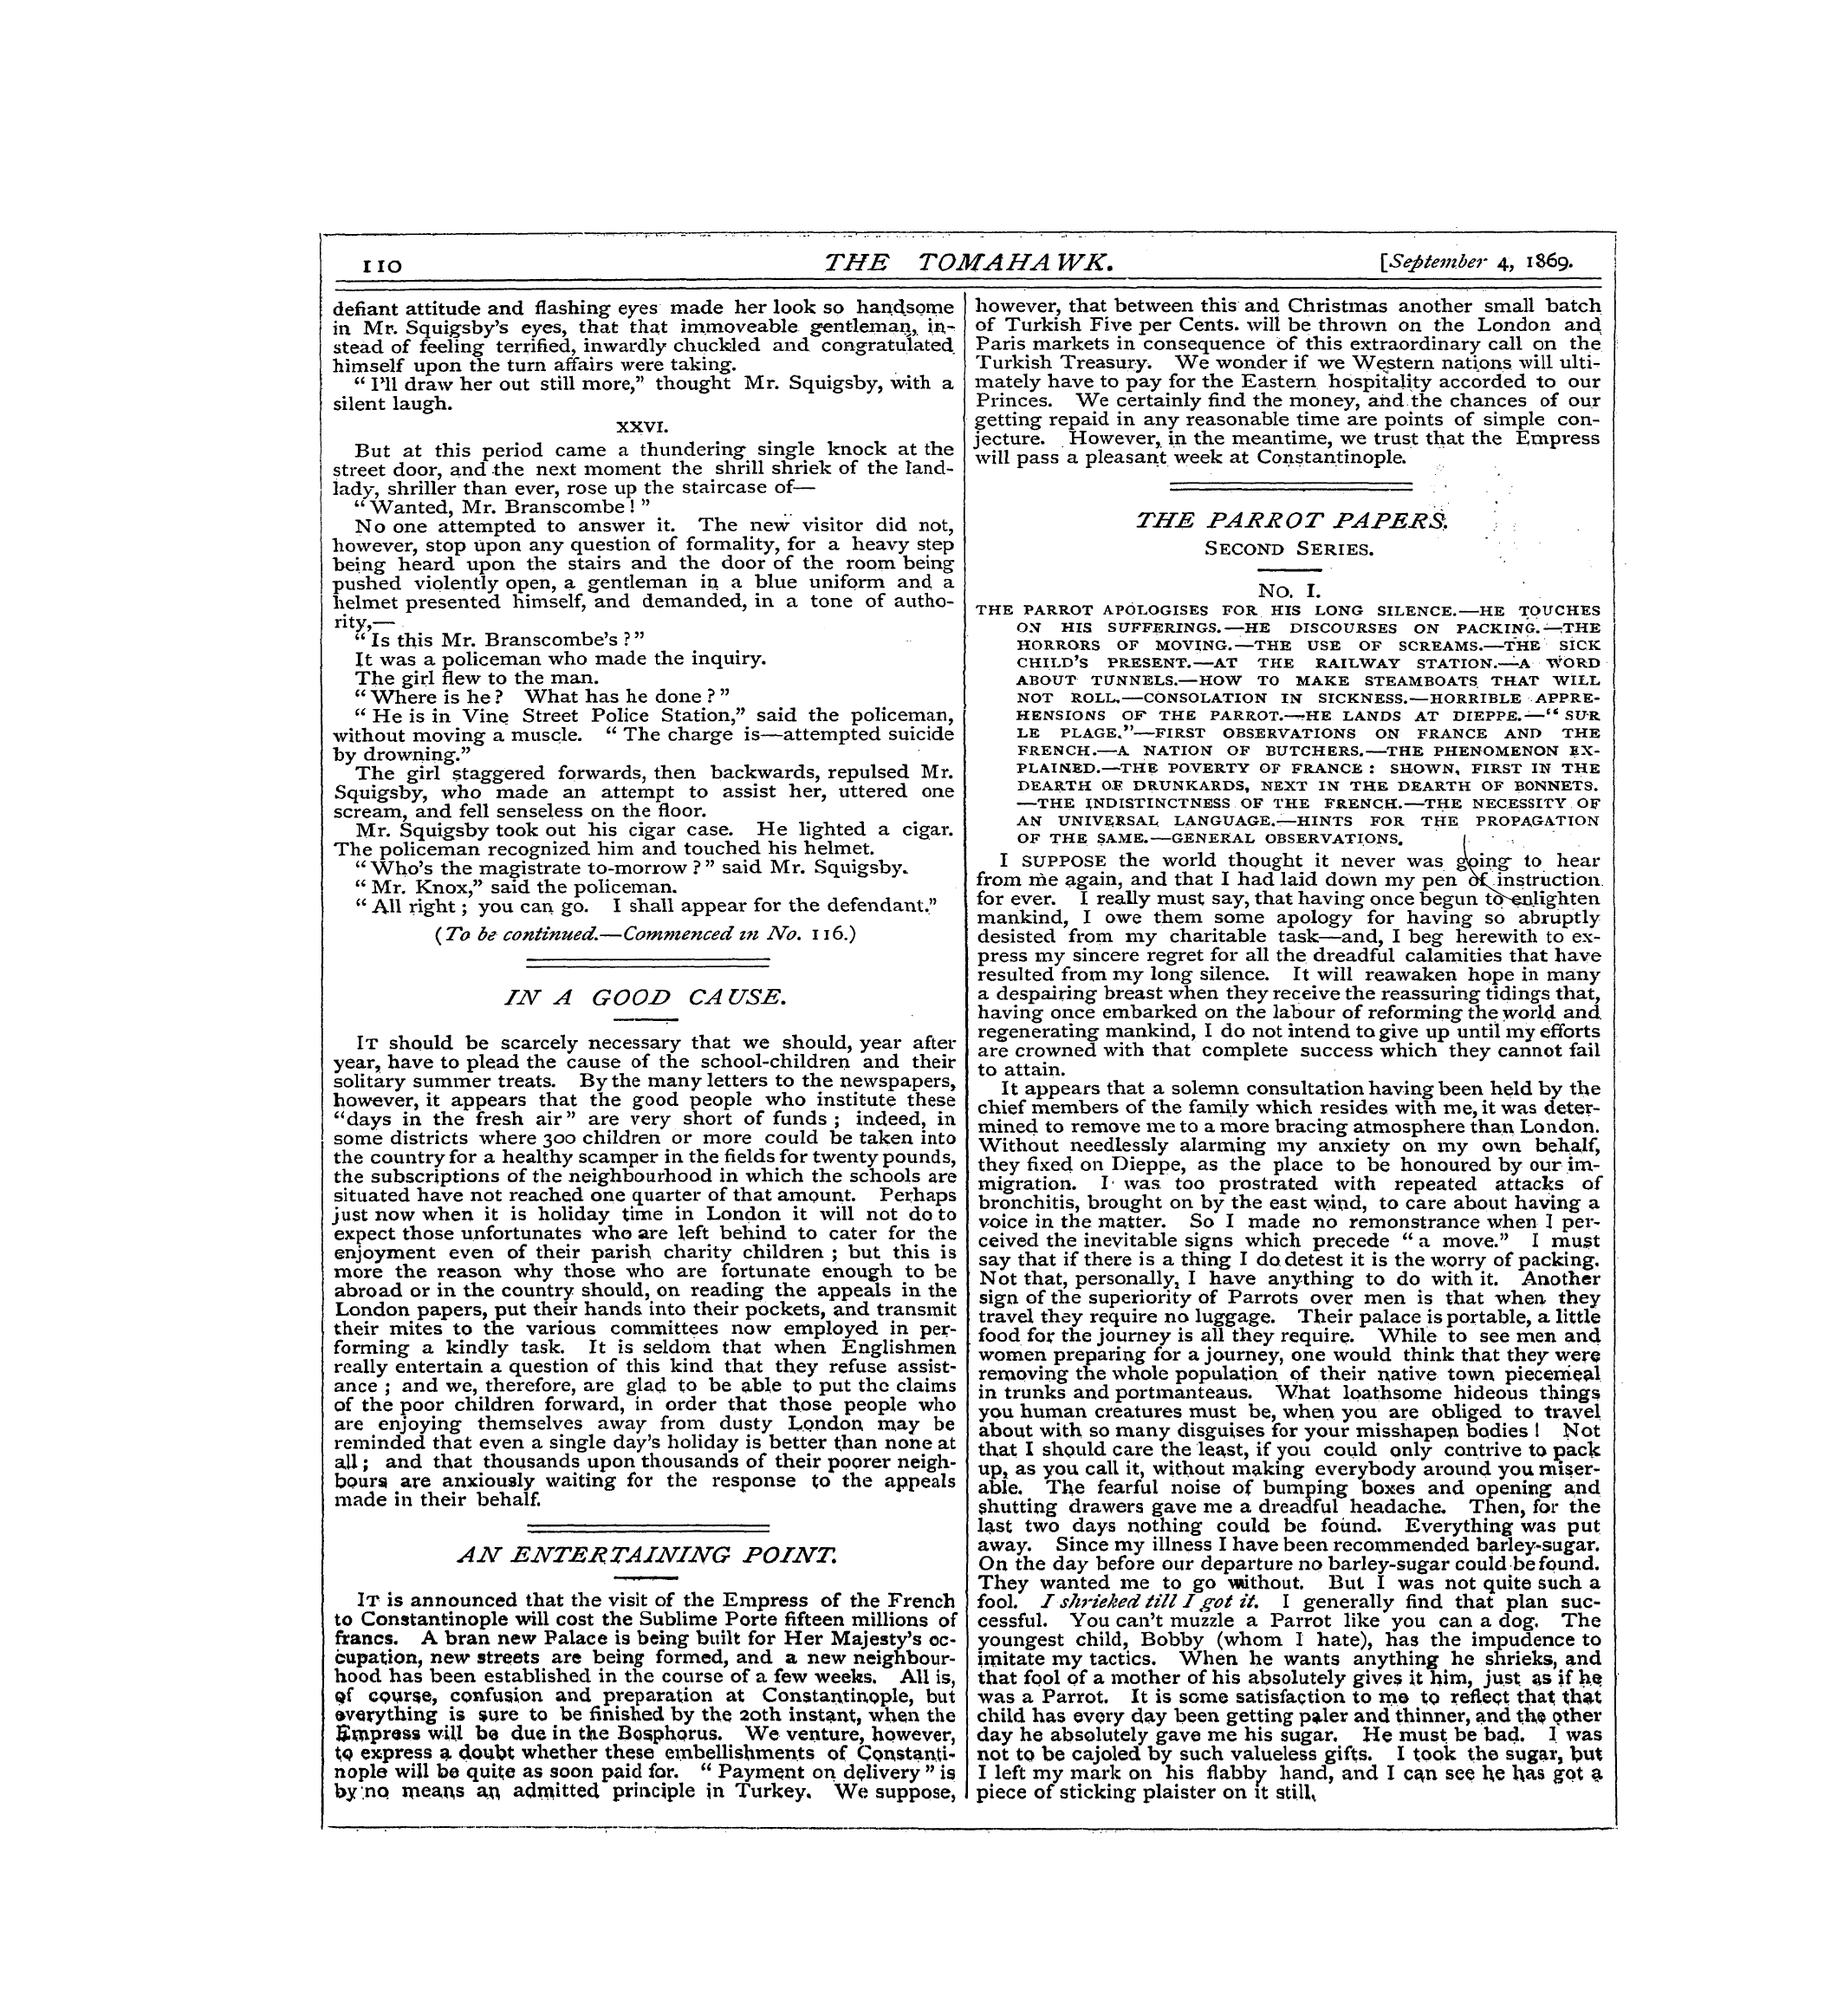 Tomahawk (1867-1870): jS F Y, 1st edition: 12